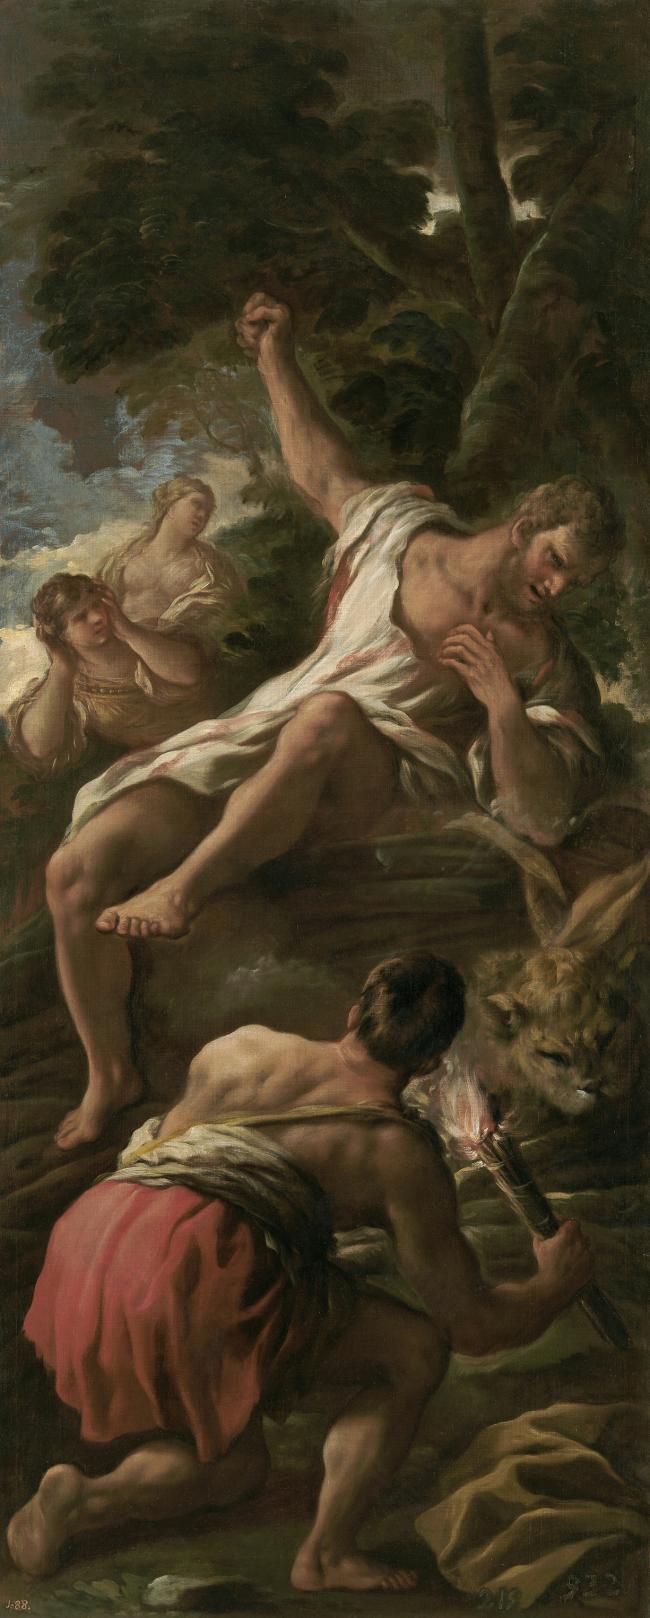 Giordano, Luca - Hercules en la pira, Ca. 1697意大利画家卢卡焦尔达诺Fa Presto人物油画装饰画